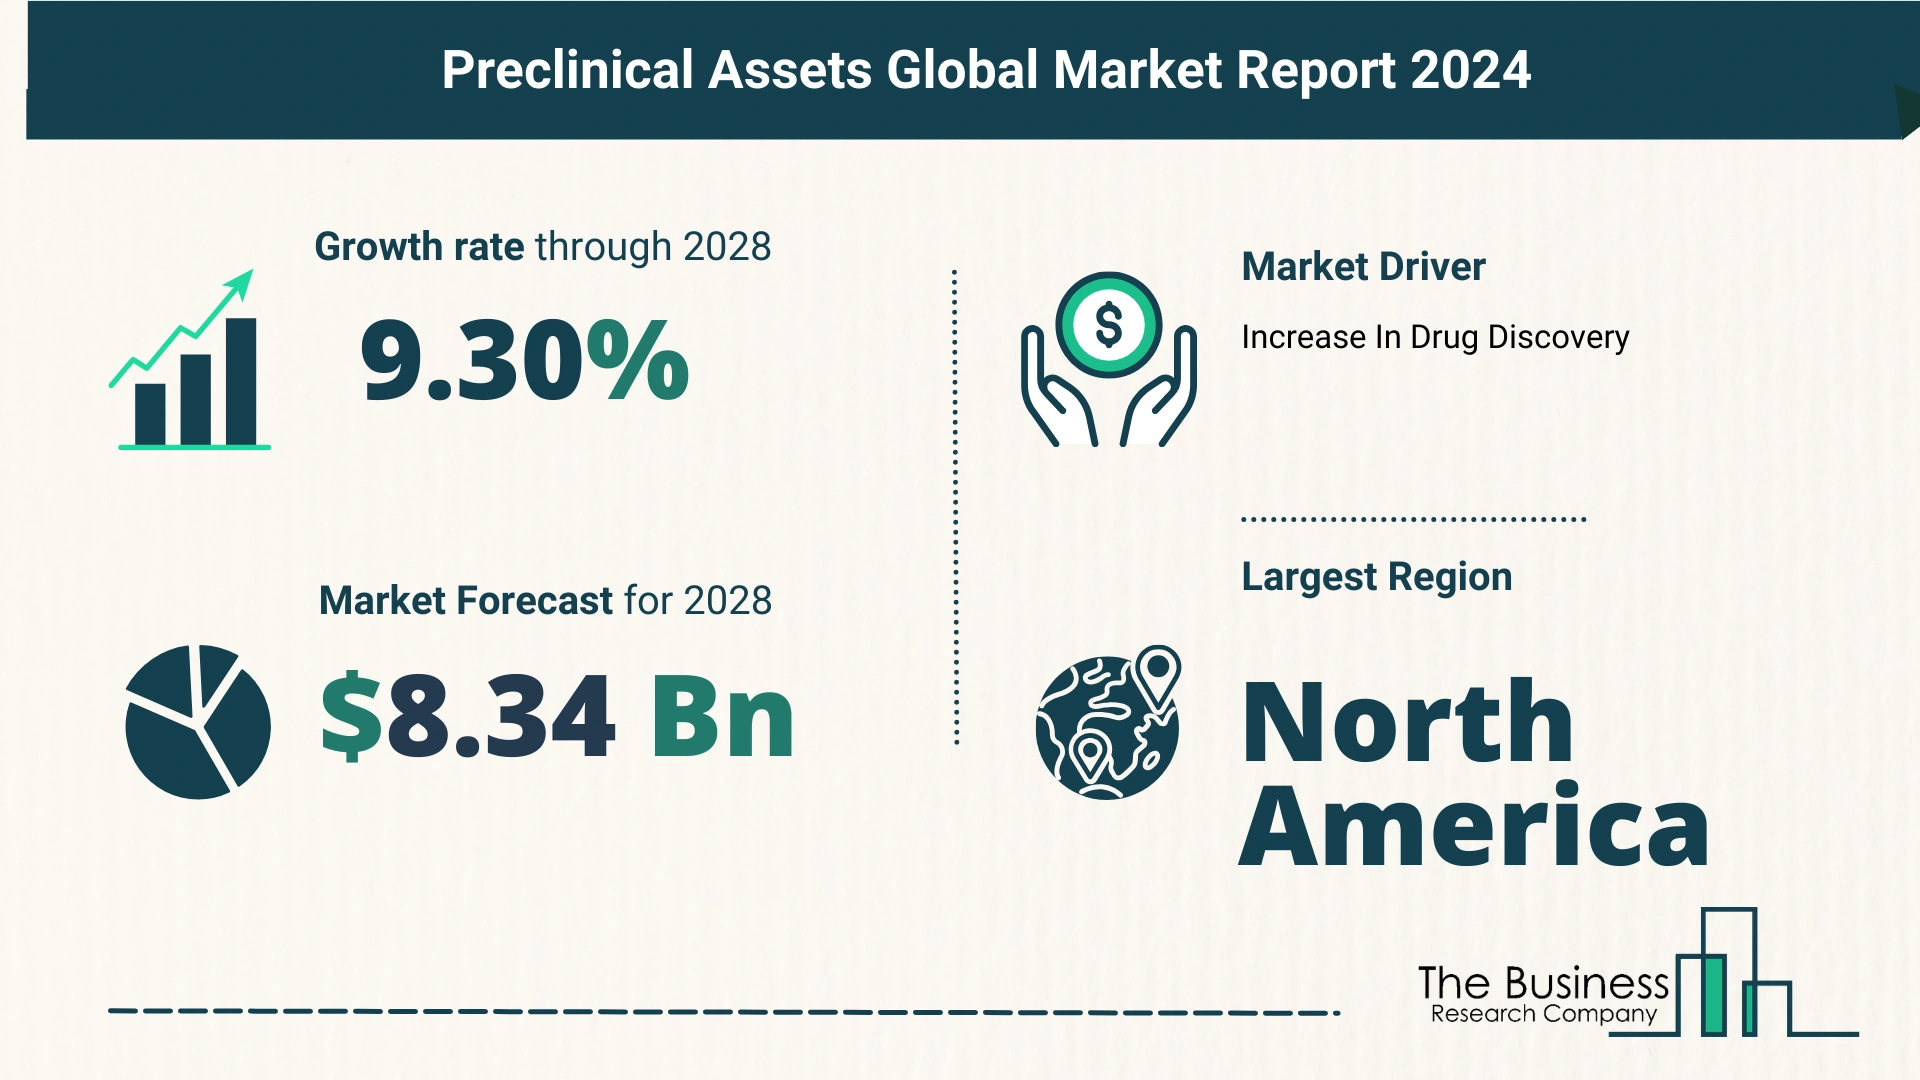 Global Preclinical Assets Market Size